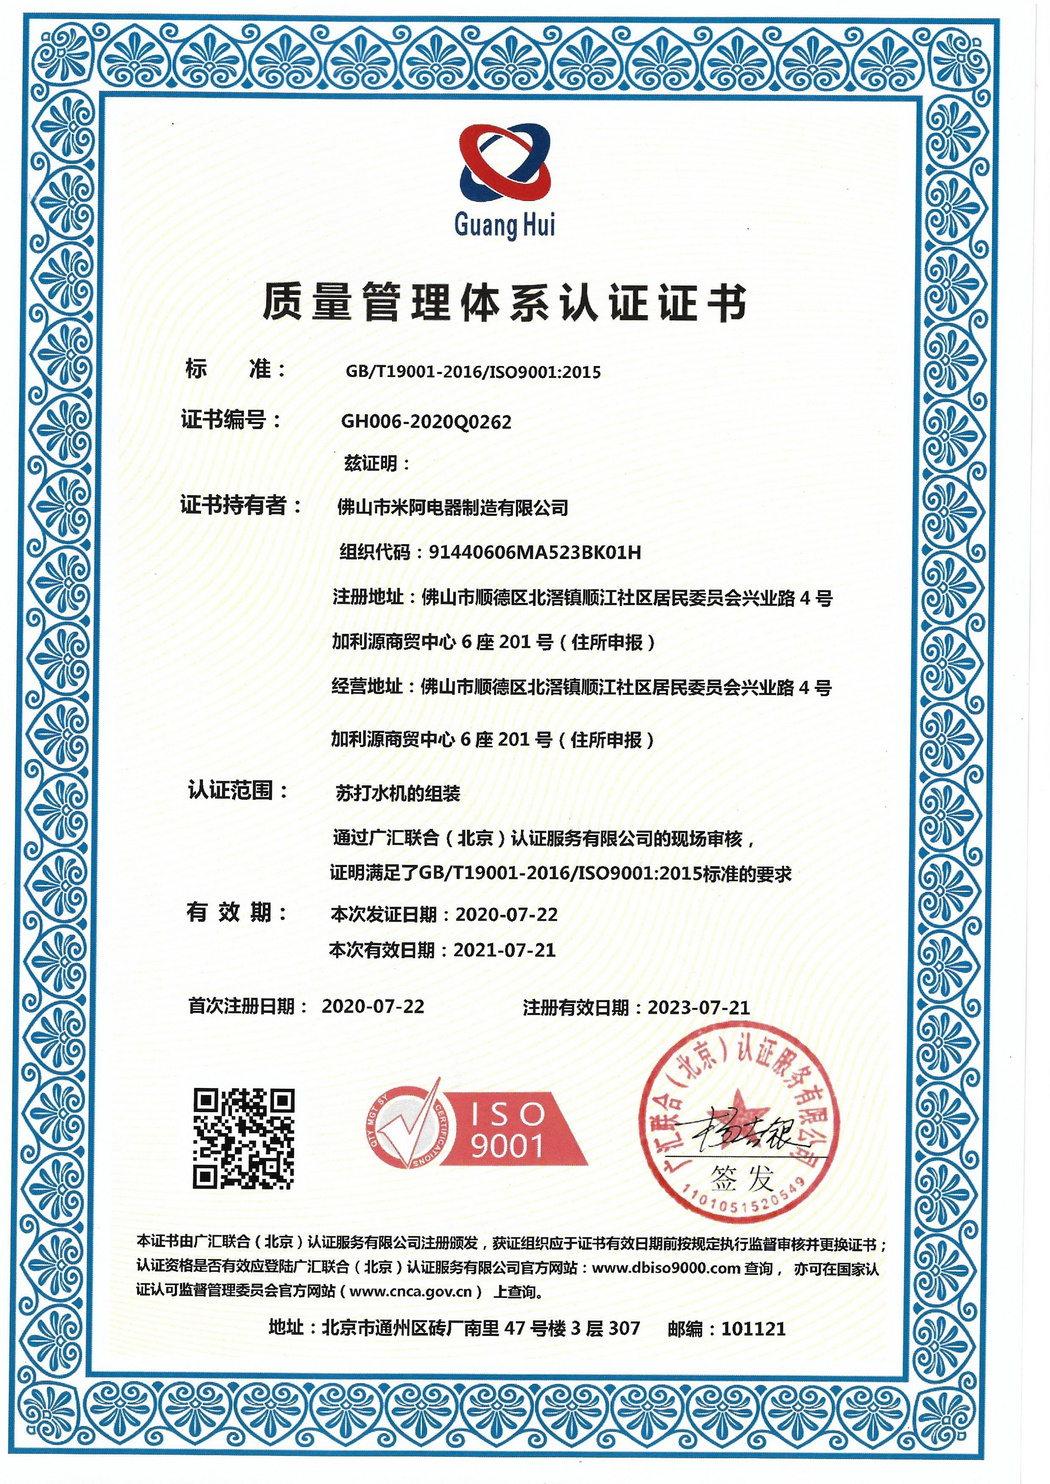 ISO9001质量管理管系认证证书